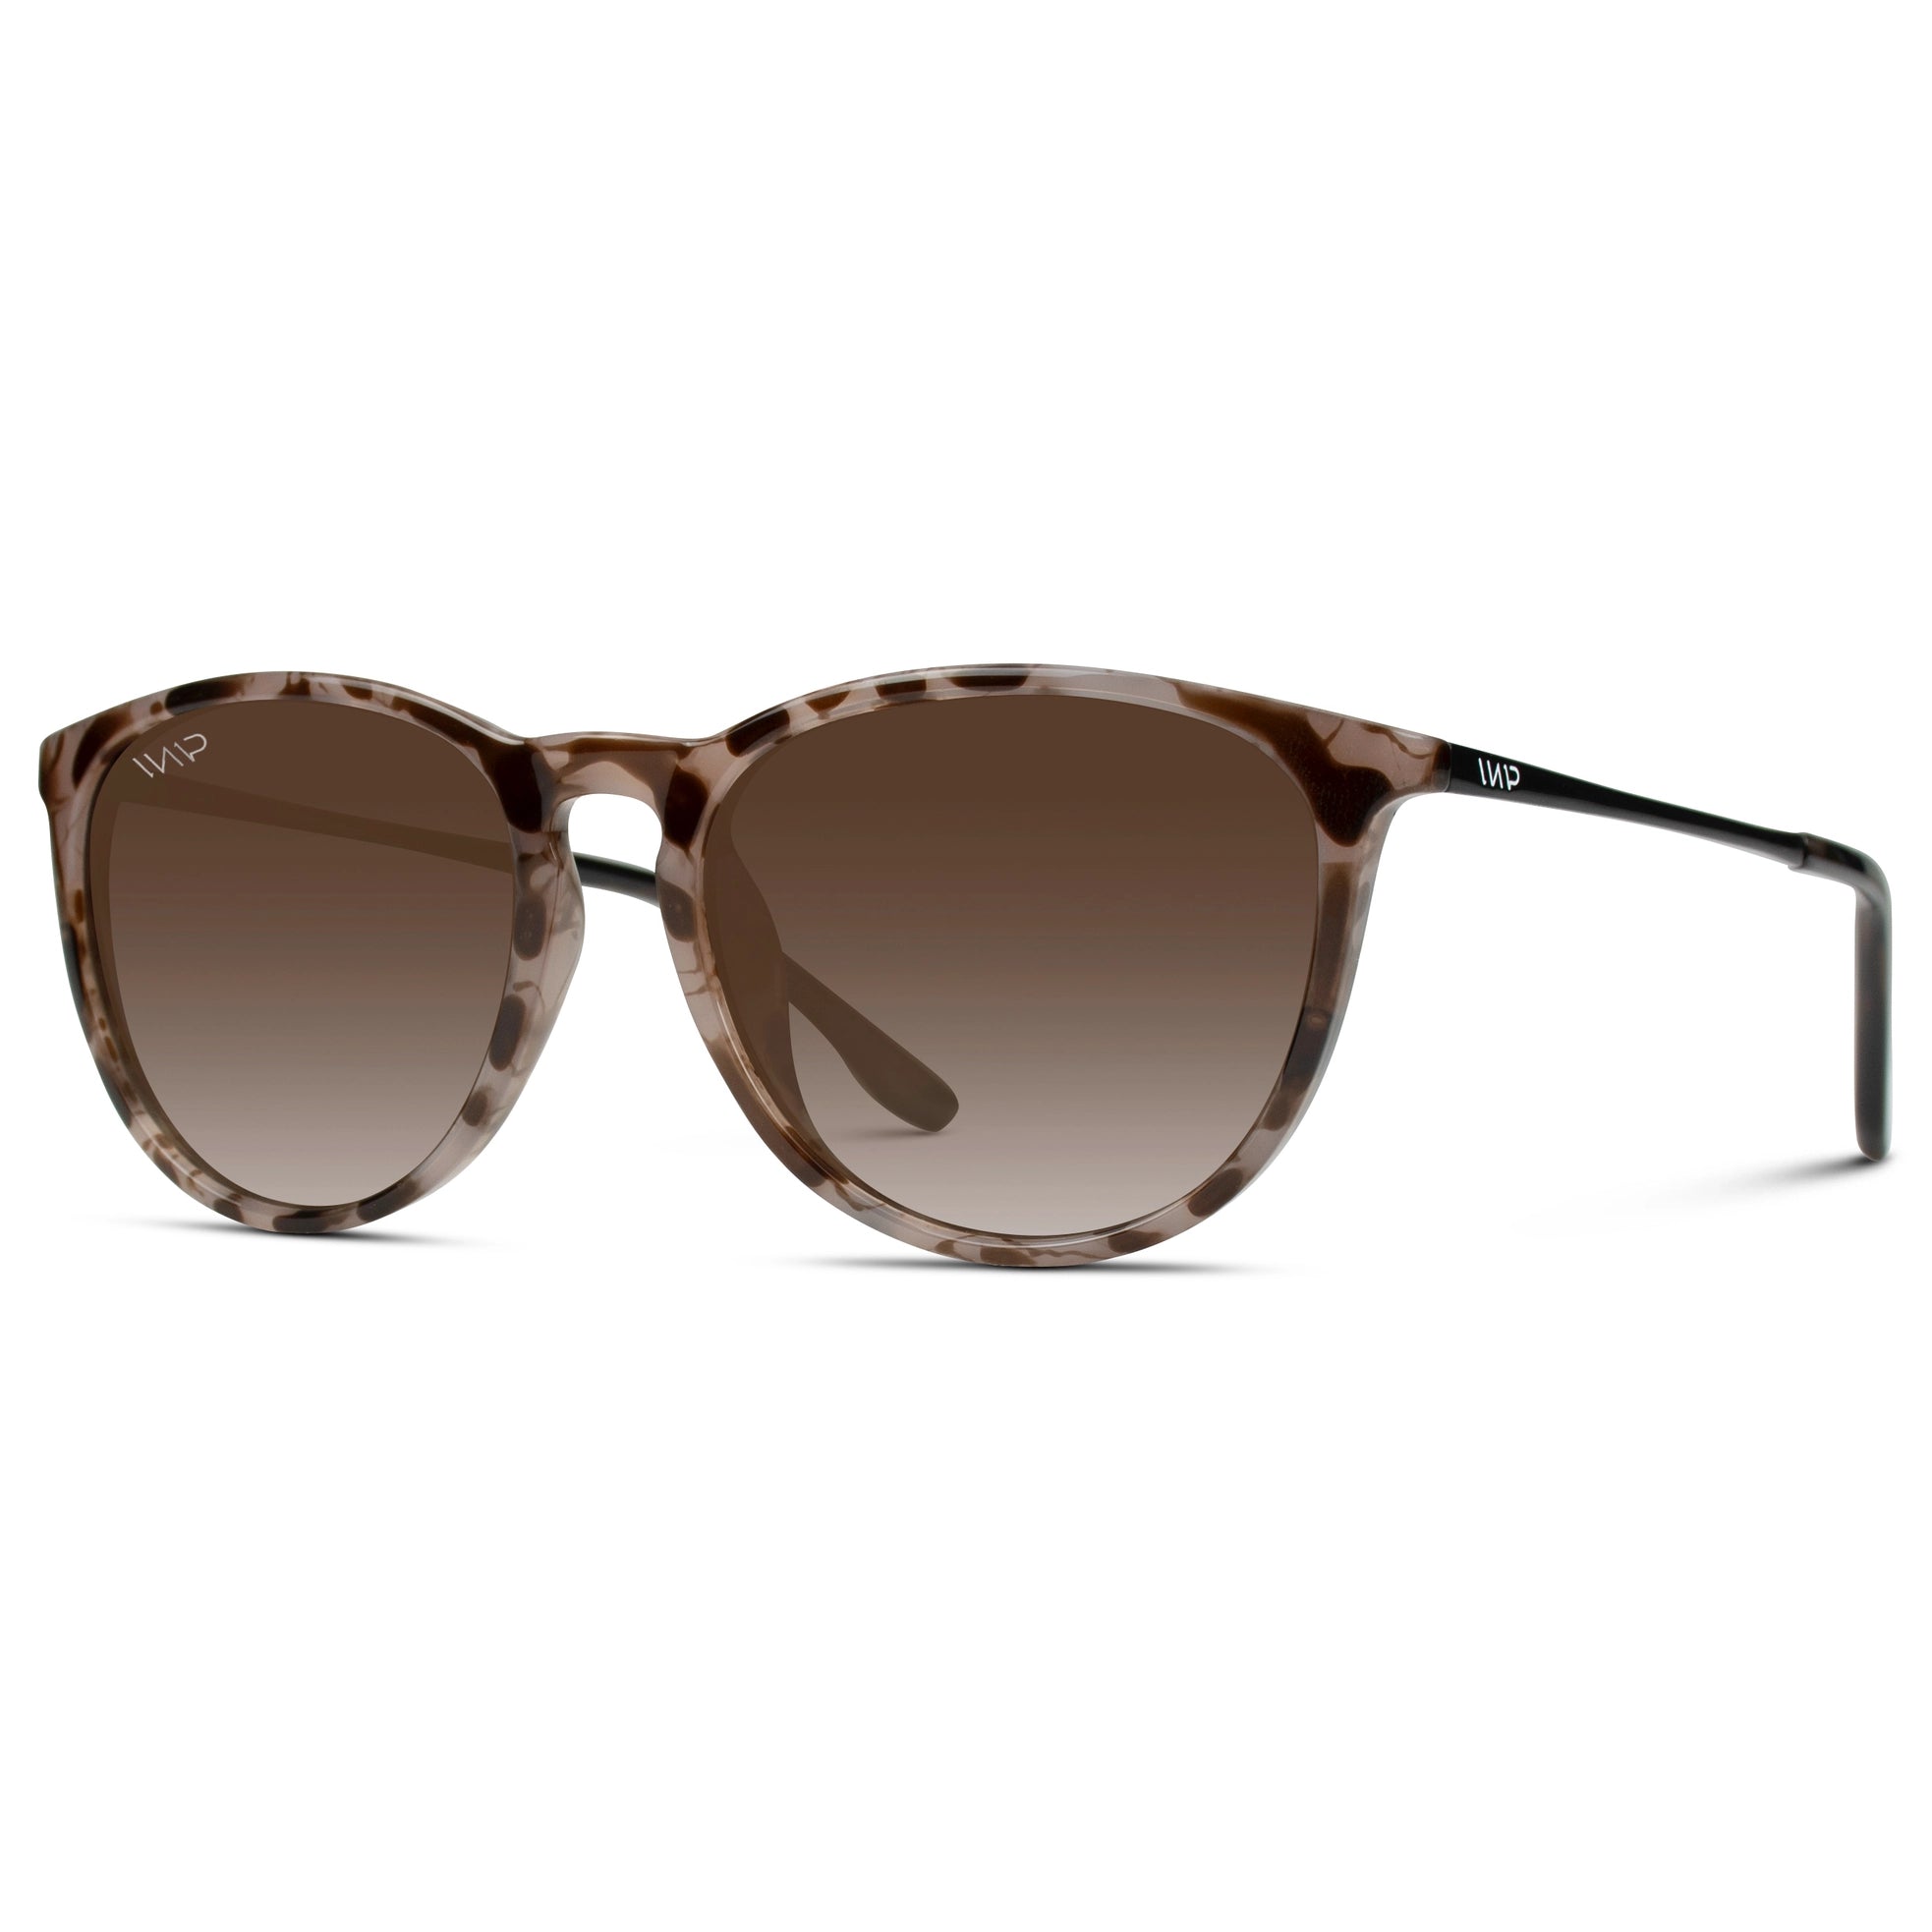 Drew Sunglasses in Blush Pink Tortoise/Brown Lens